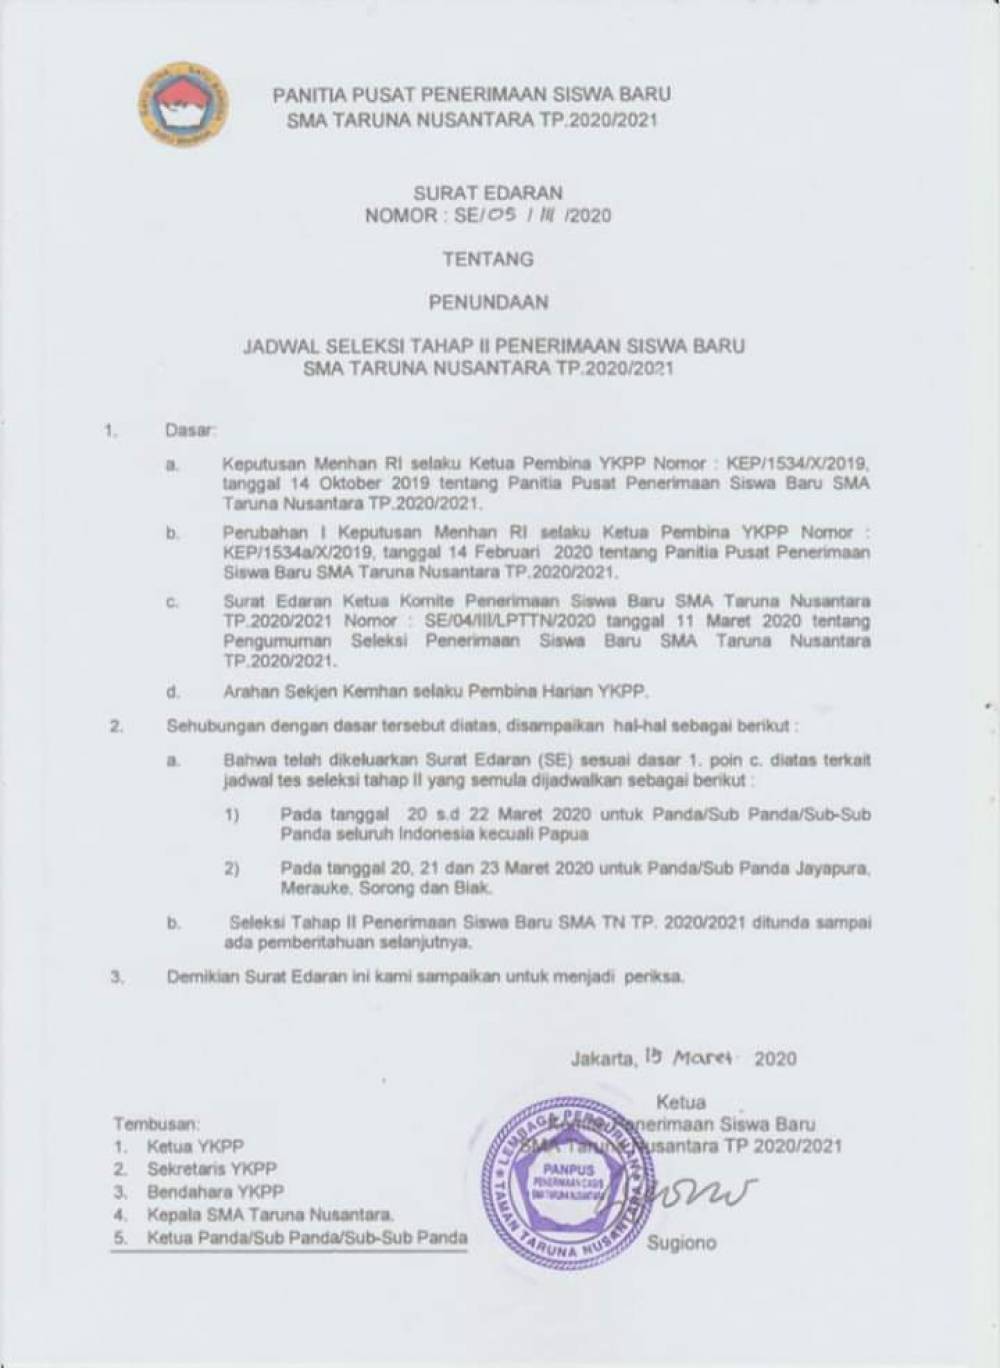 Seleksi Tahap II Pensisru SMA TN TP 2020/2021 ditunda sampai pemberitahuan selanjutnya